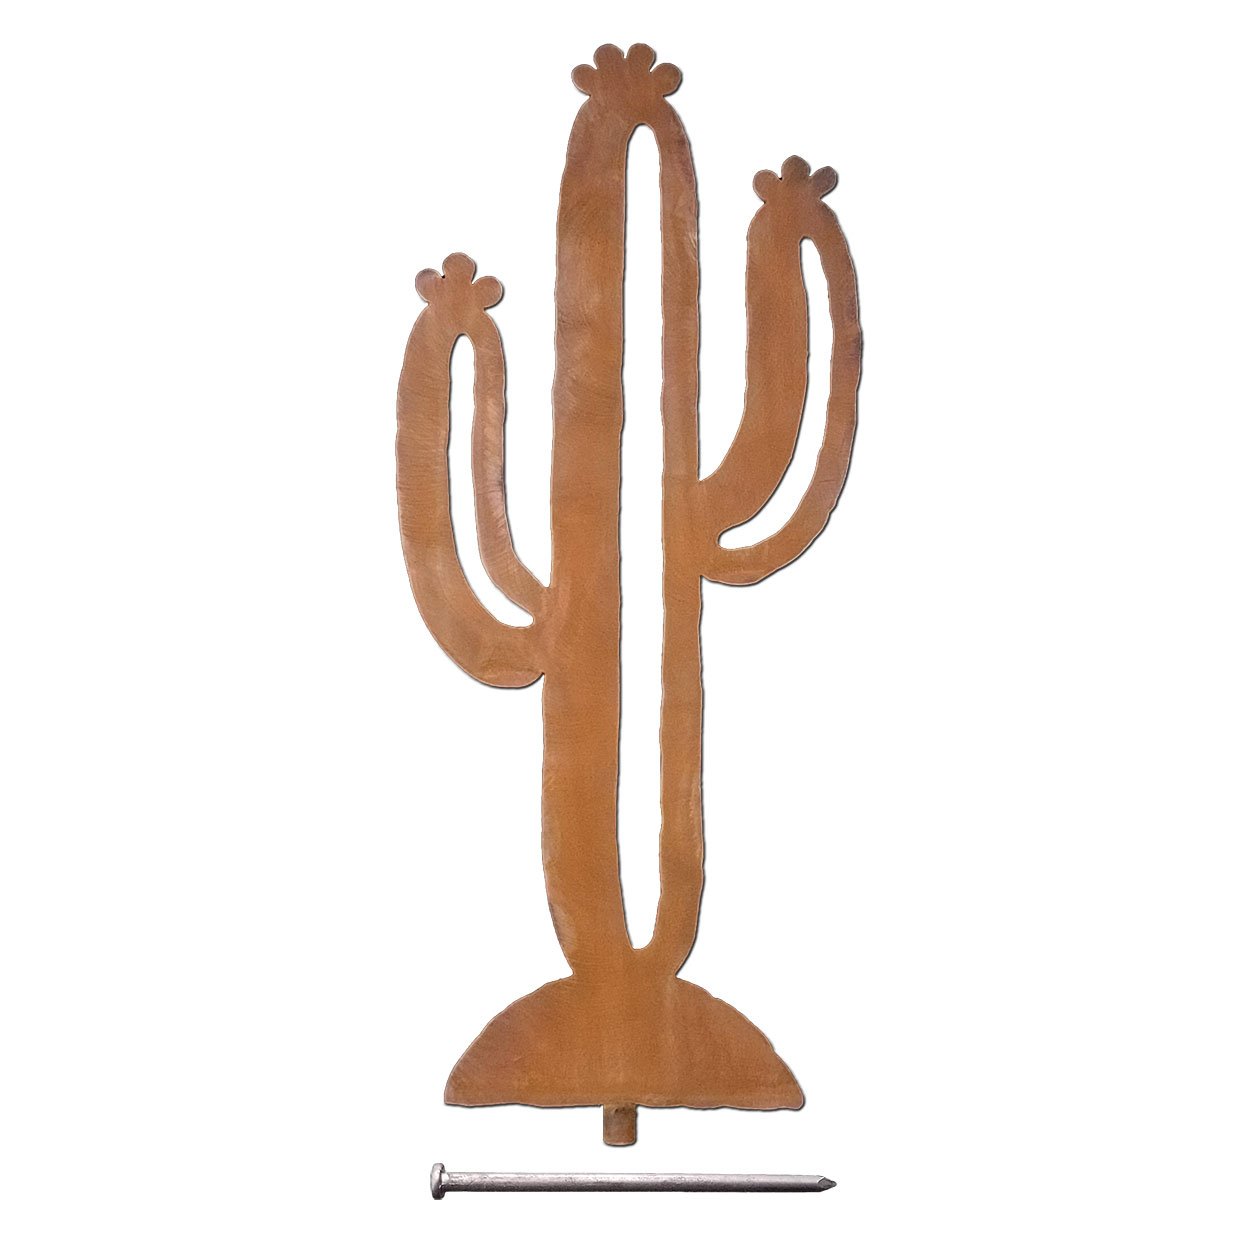 165582 - 24-inch large Saguaro Cactus Yard Art Statue in a rich rust finish